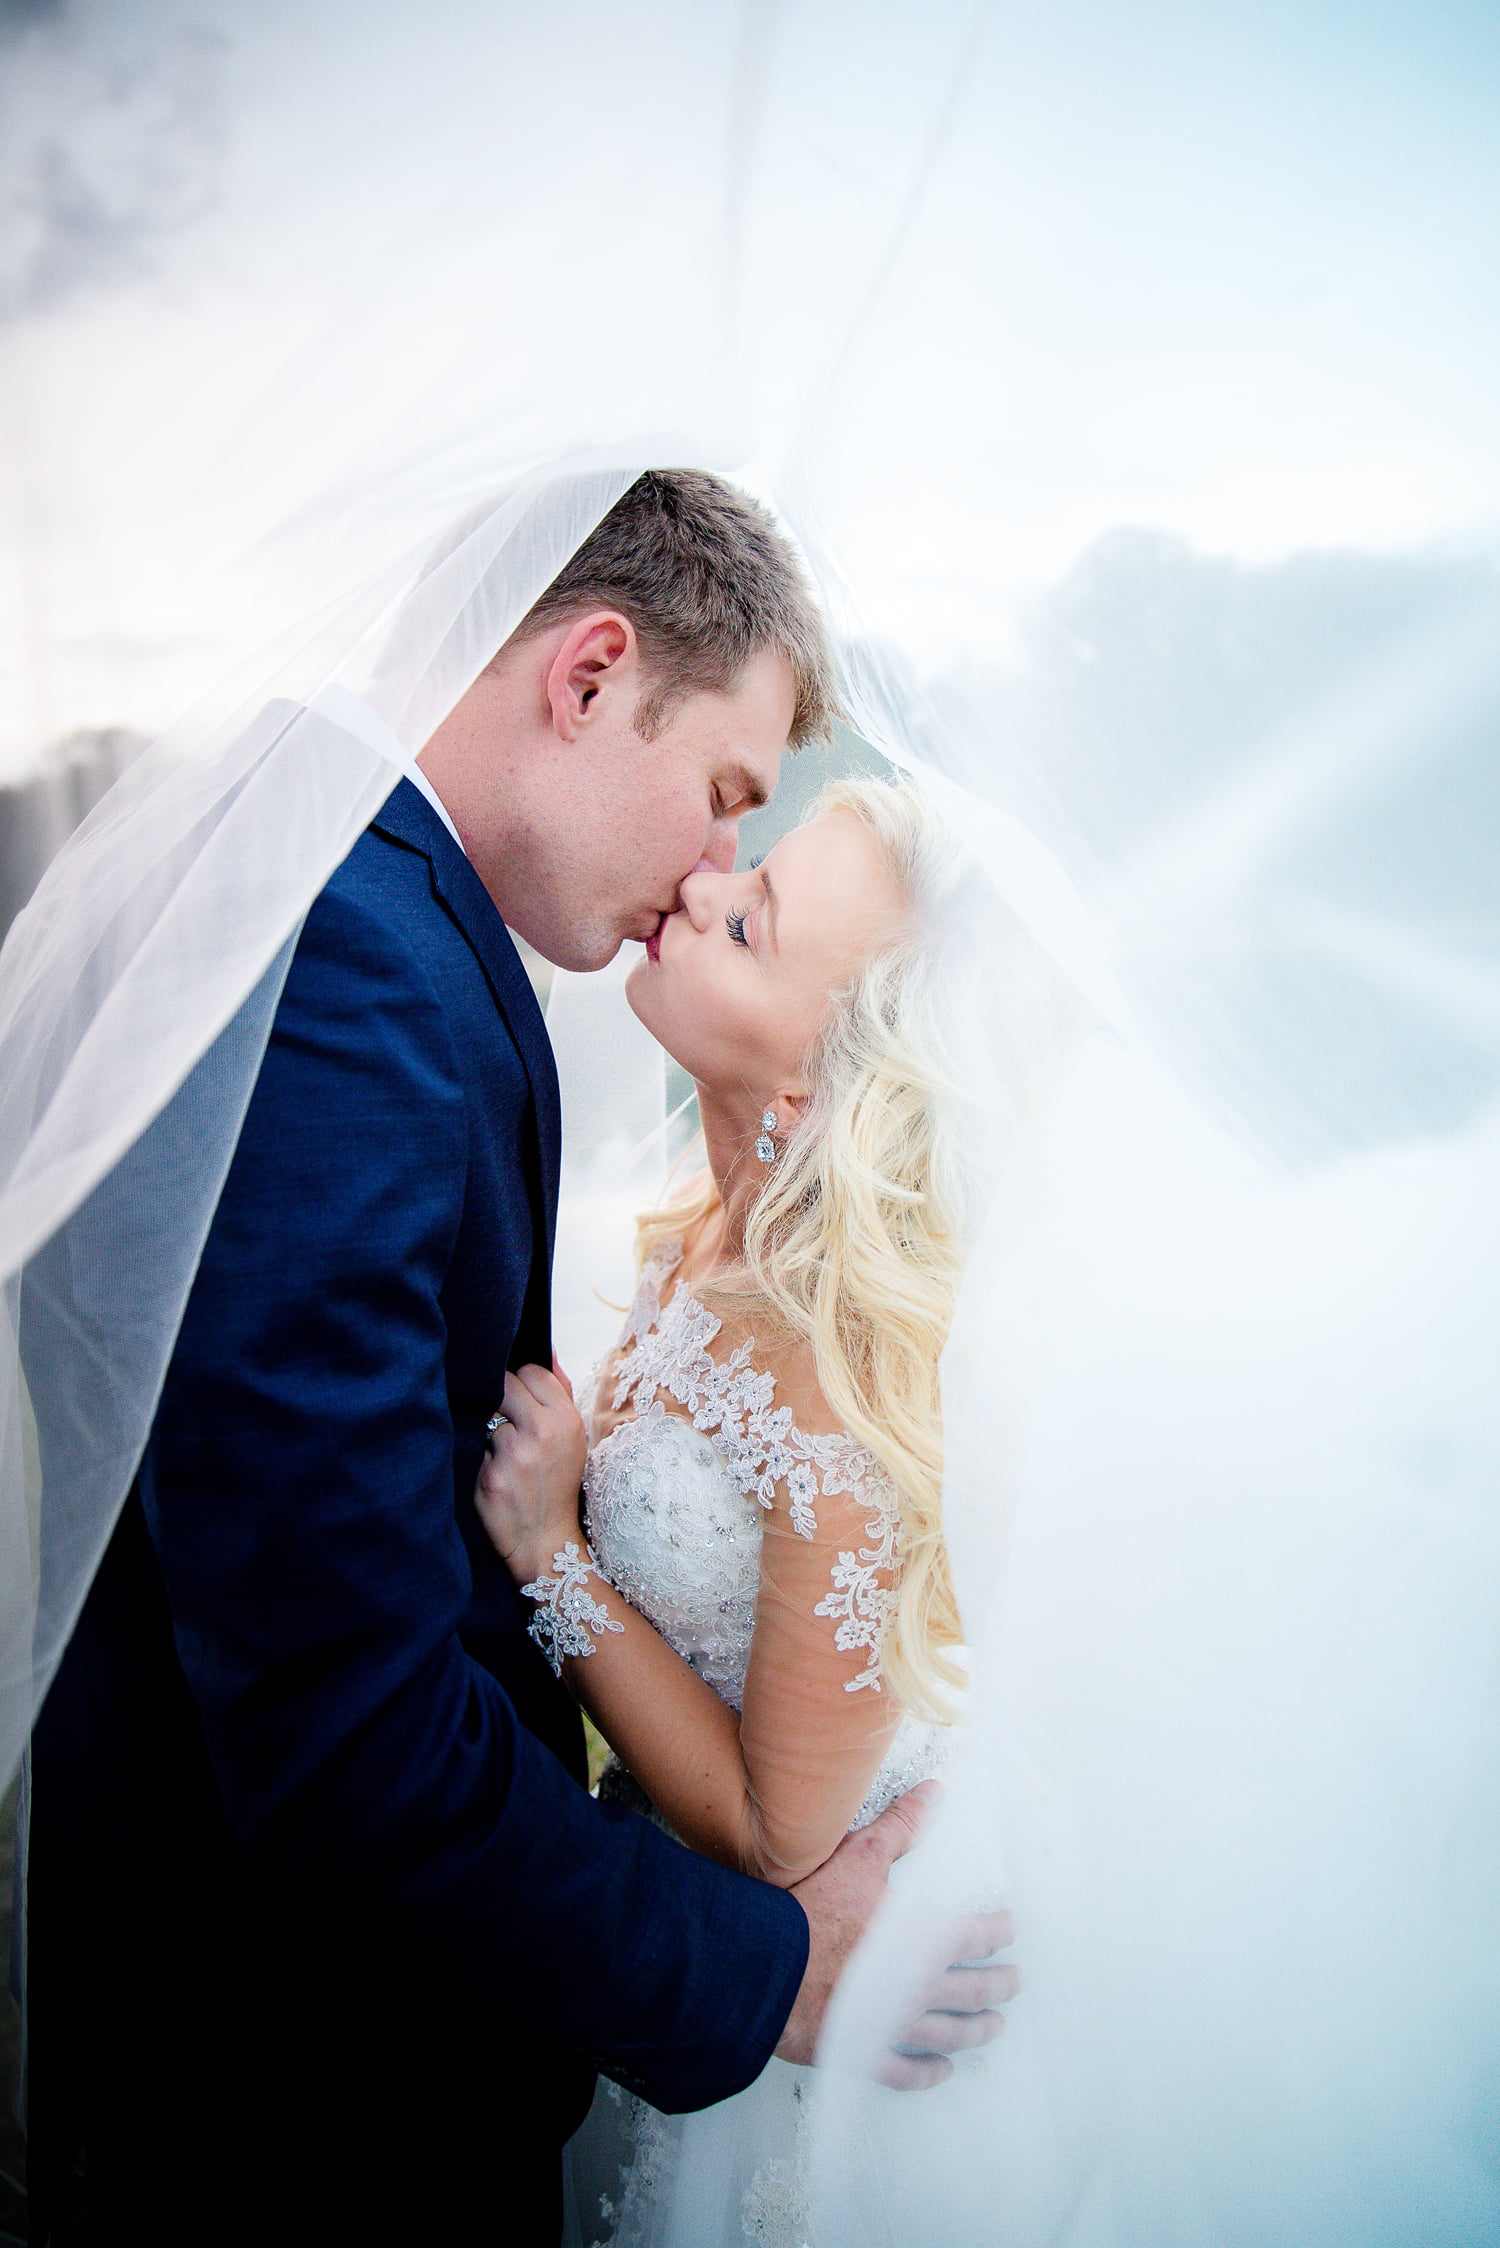 Wedding photo taken by Lisa Rowland Photography in Trenton, Florida